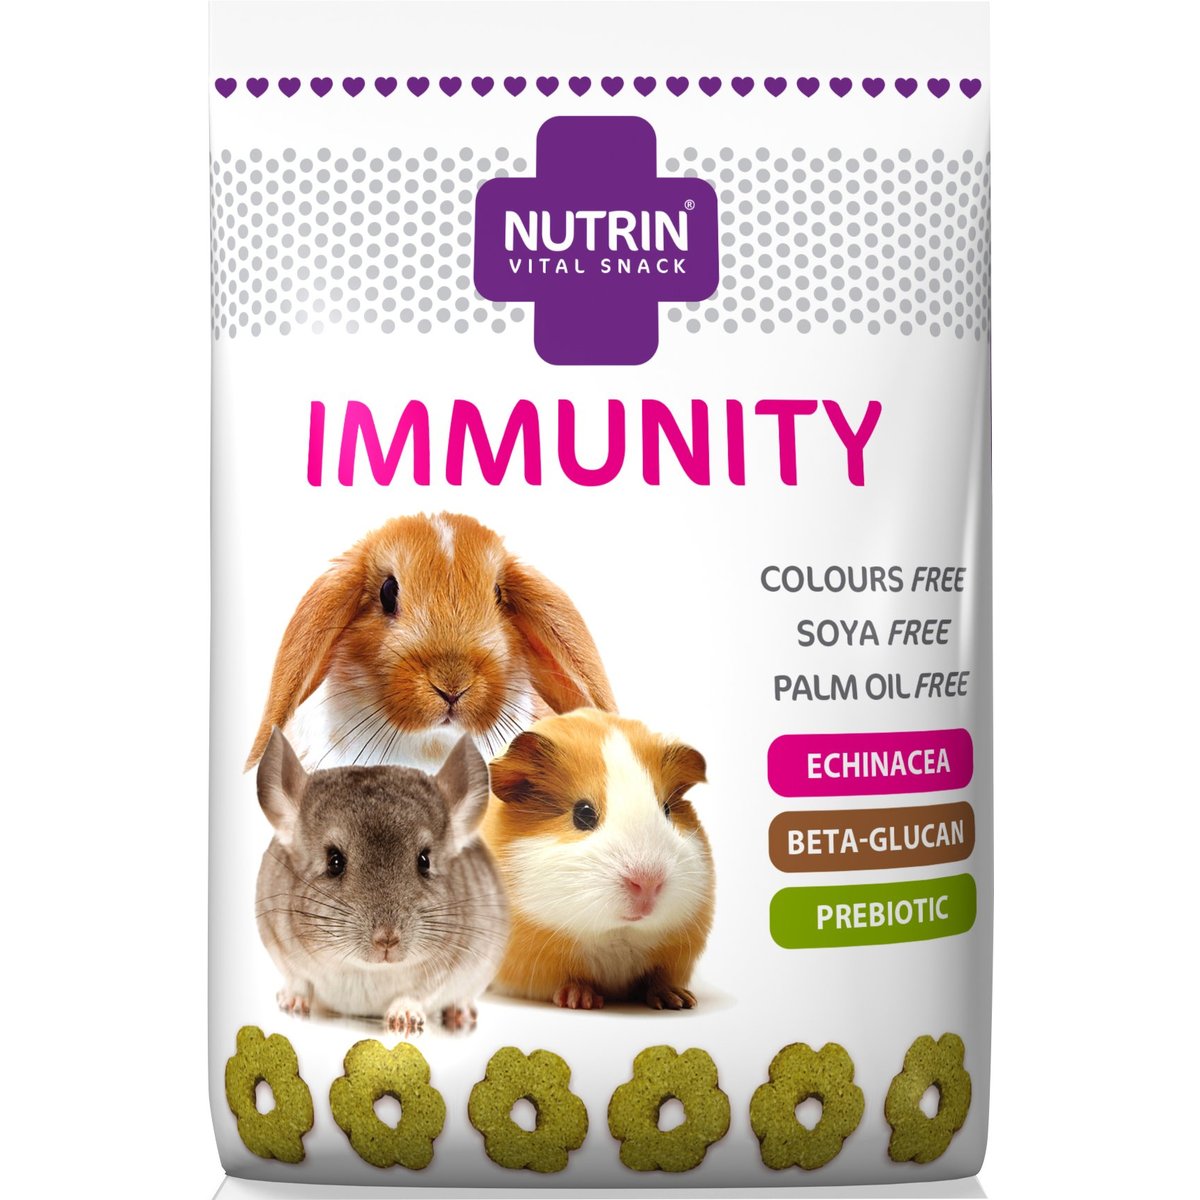 Nutrin Vital Snack Immunity